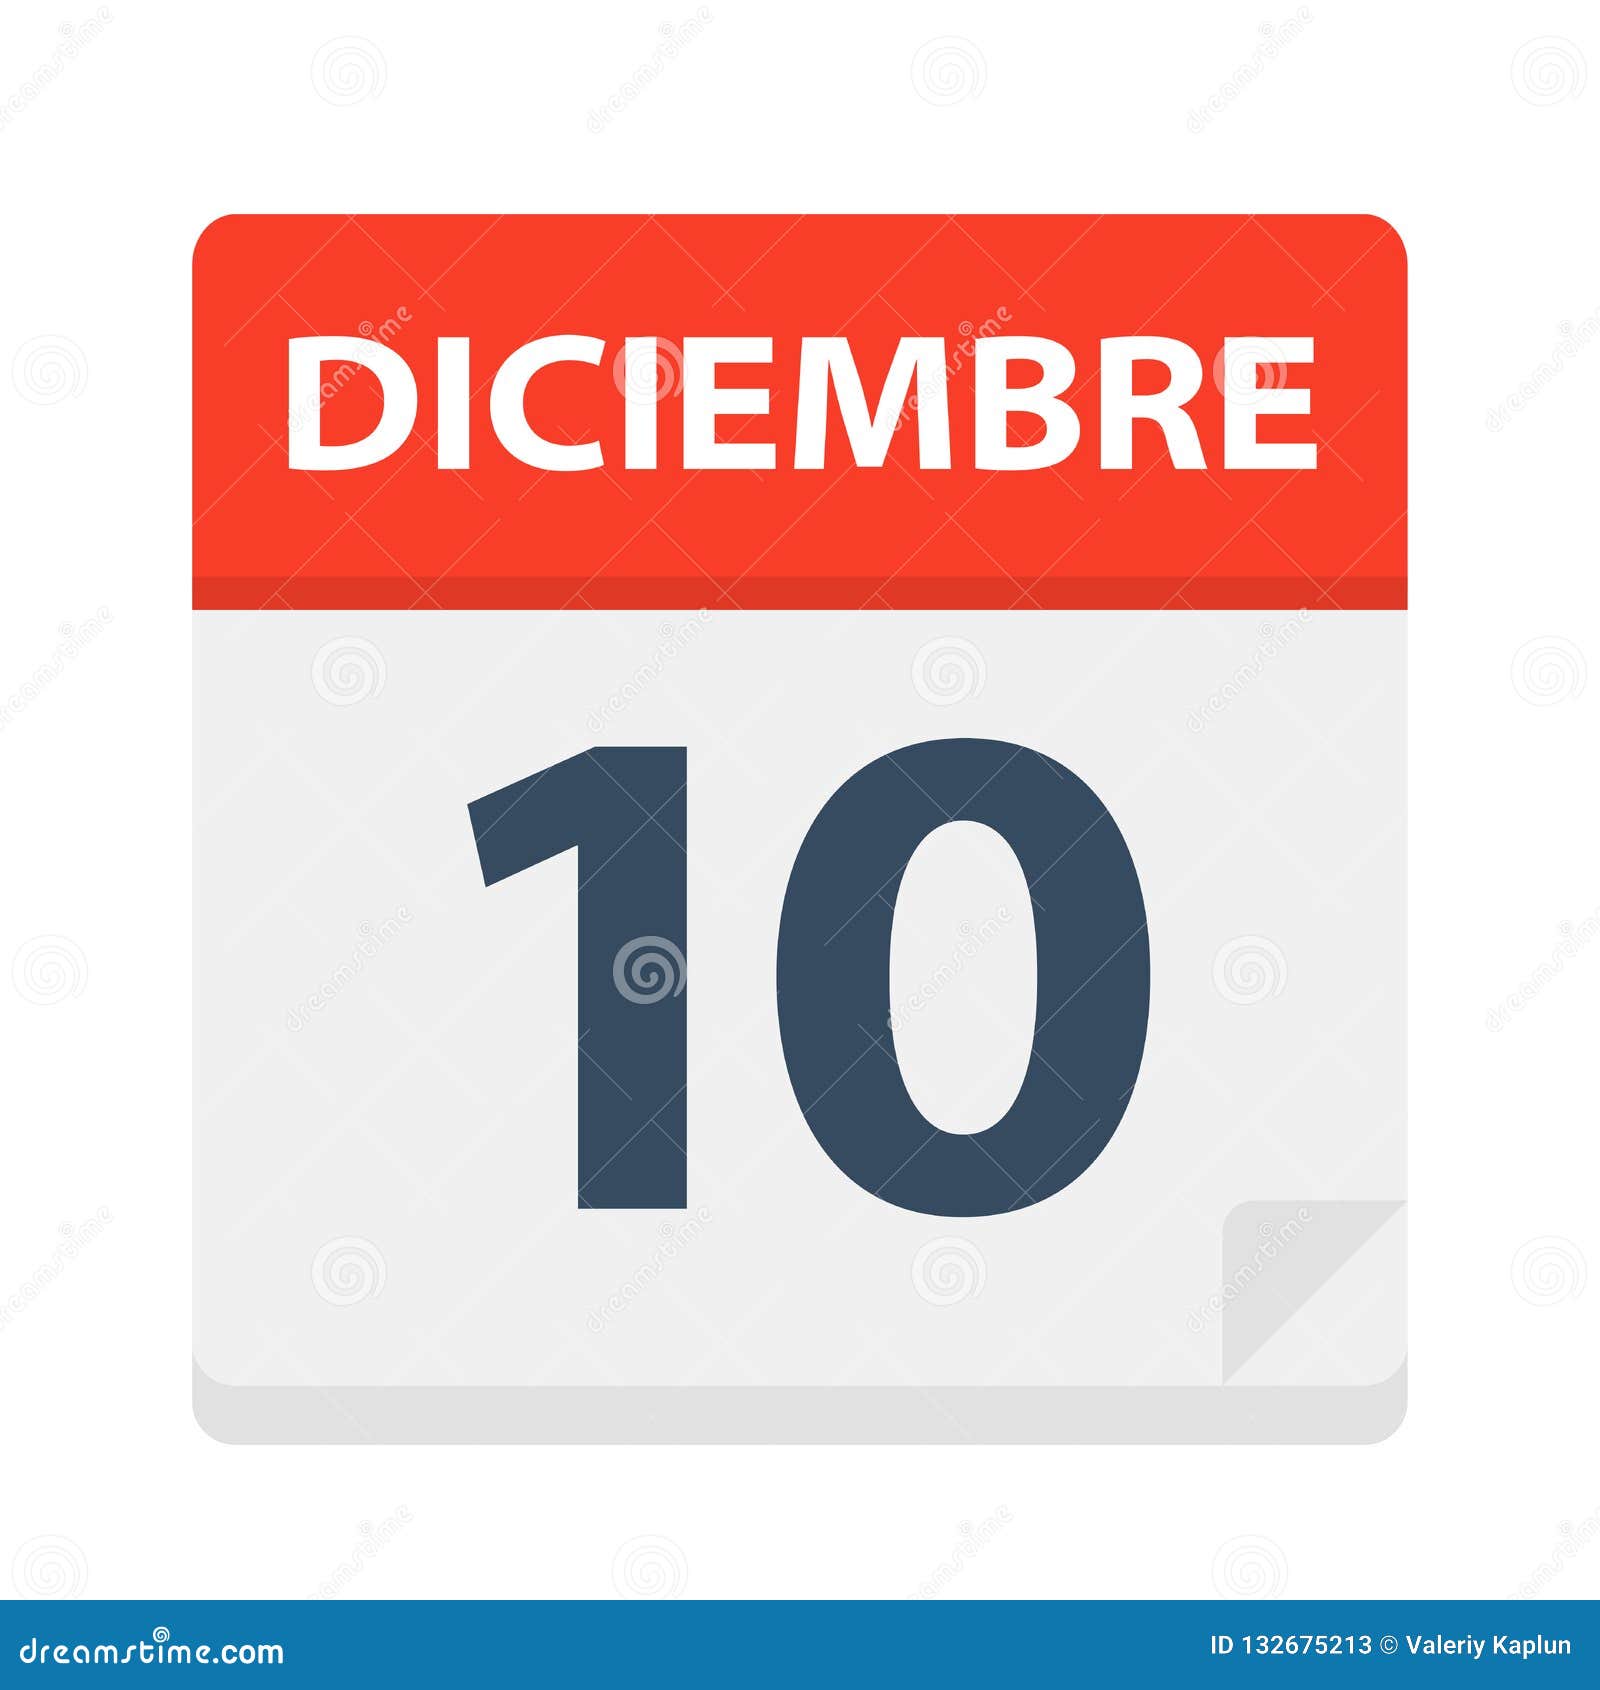 diciembre 10 - calendar icon - december 10.   of spanish calendar leaf